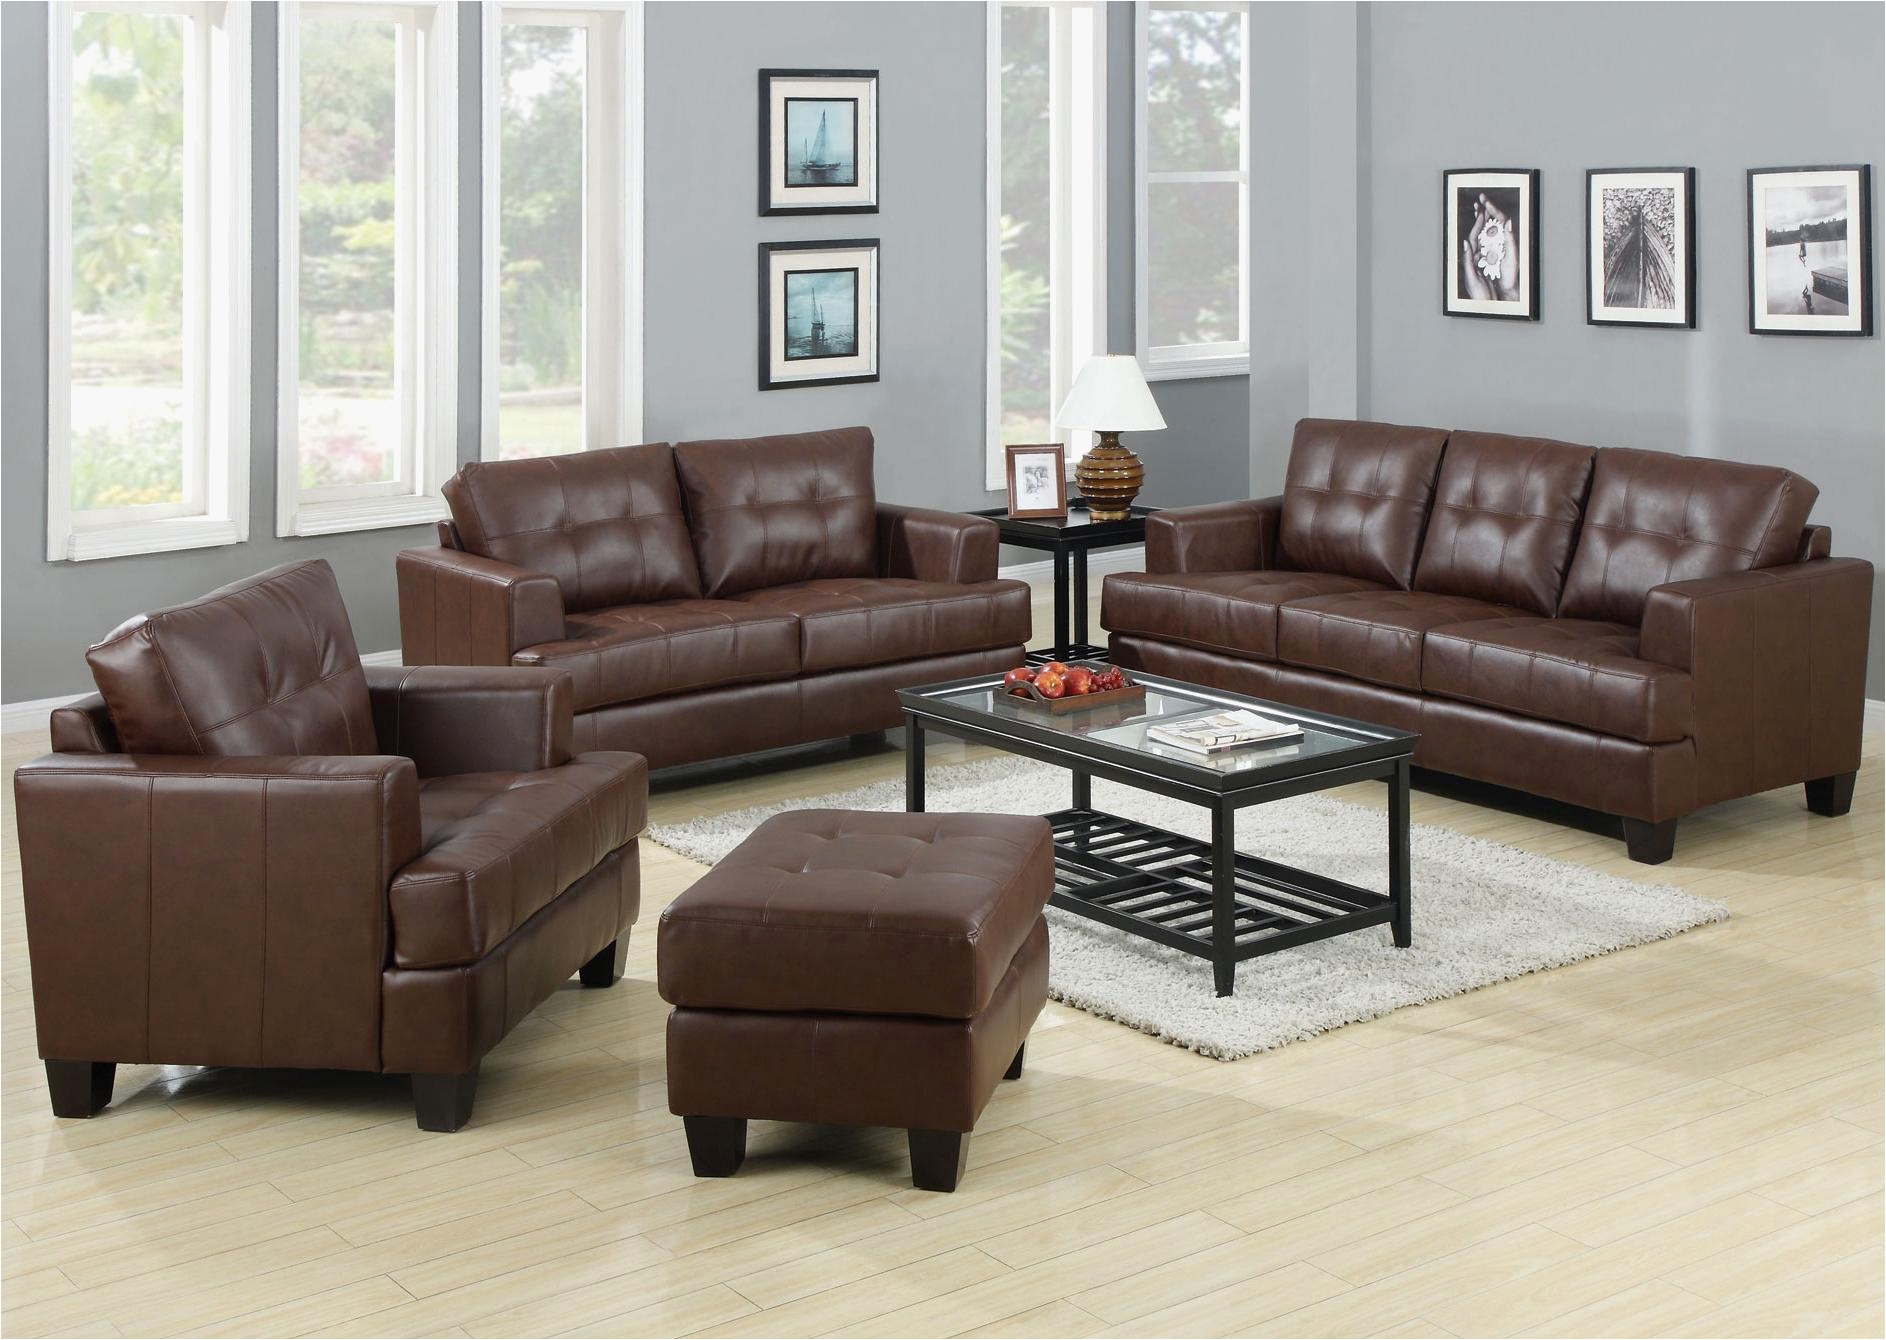 best leather furniture manufacturers unique 50 lovely top leather sofa manufacturers 50 s pictures of best